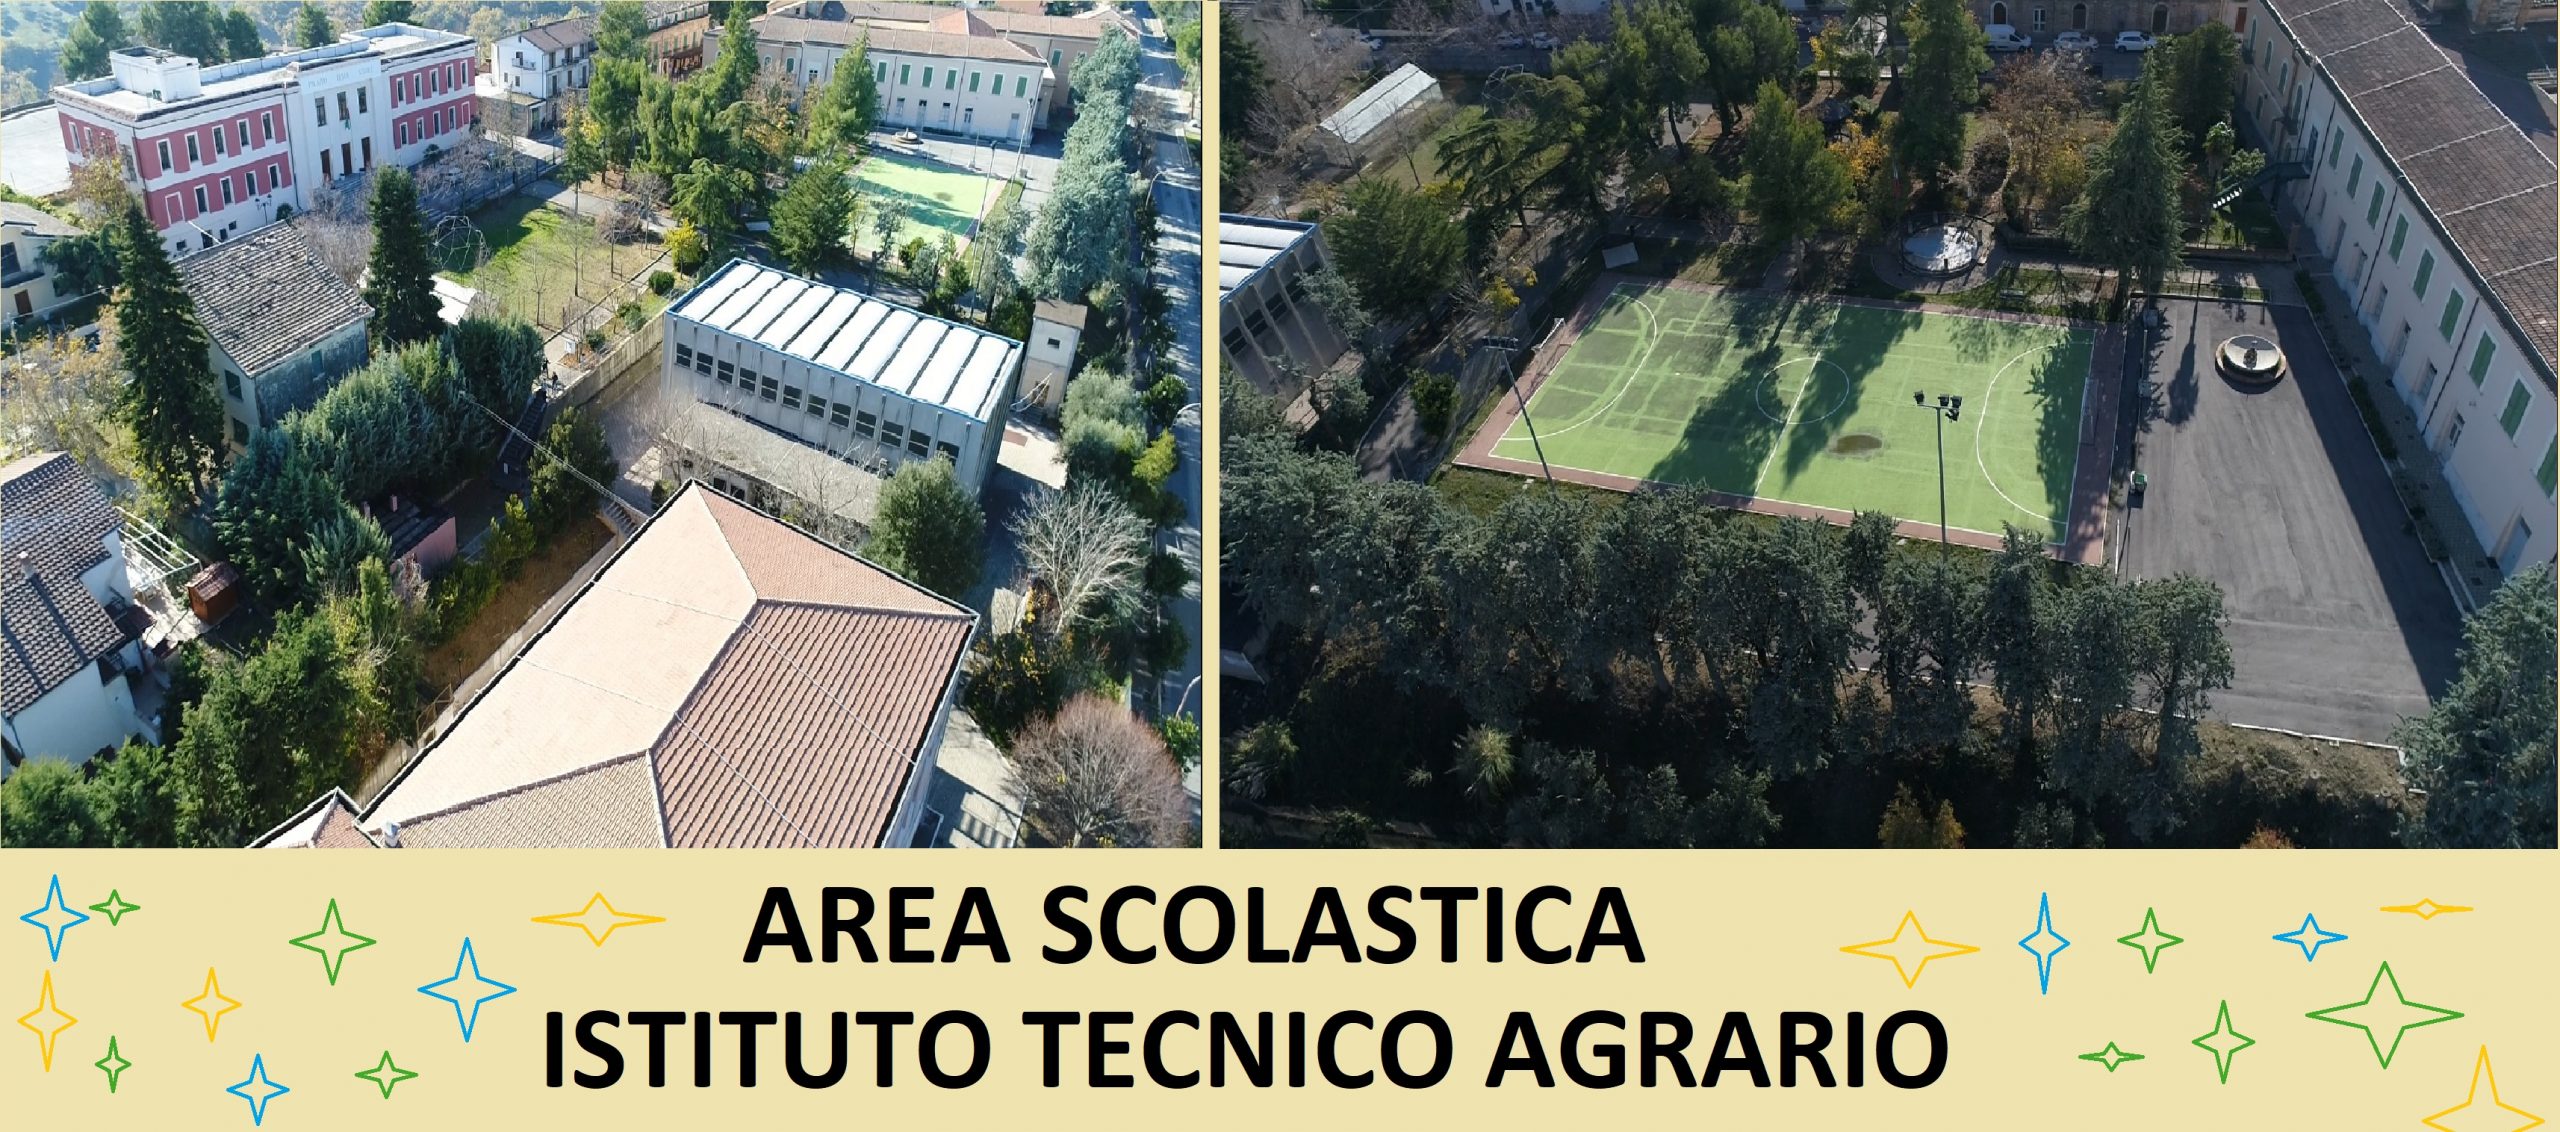 Istituto Tecnico Agrario-Area scolastica